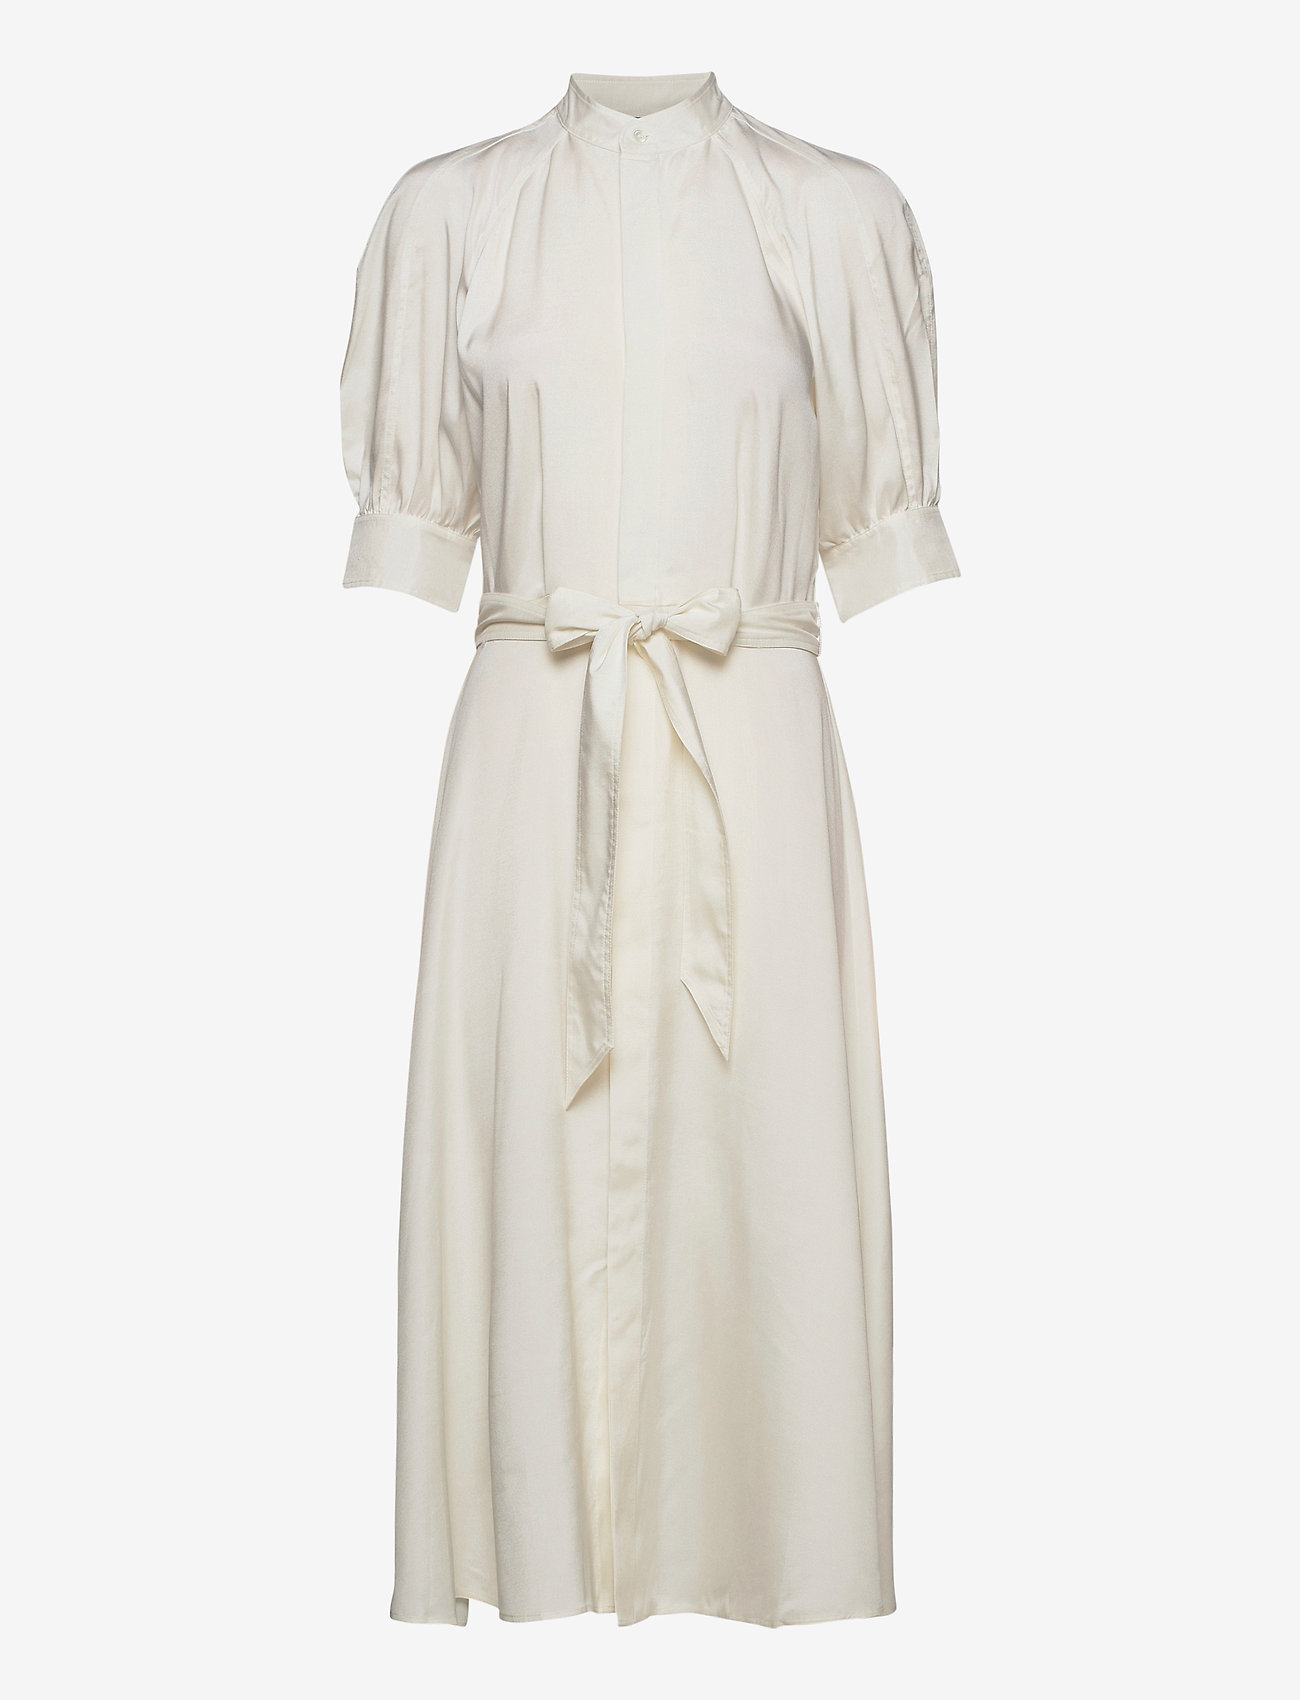 Buy > polo ralph lauren silk dress > in stock